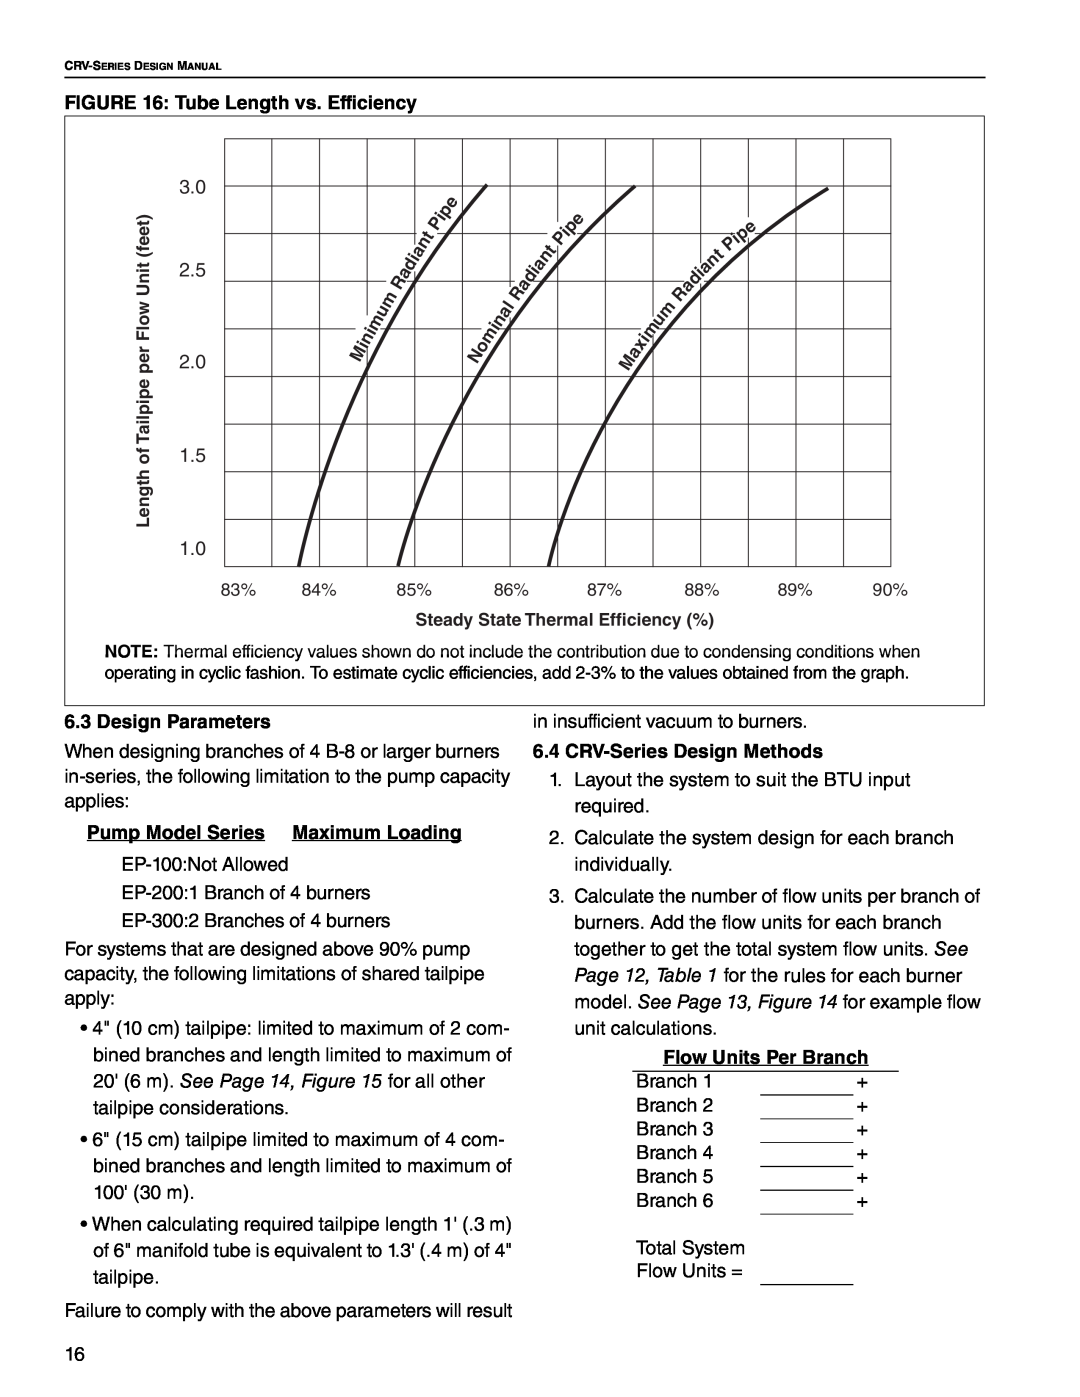 Roberts Gorden CRV-B-2, CRV-B-8, CRV-B-6 Tube Length vs. Efficiency, Design Parameters, Pump Model Series Maximum Loading 